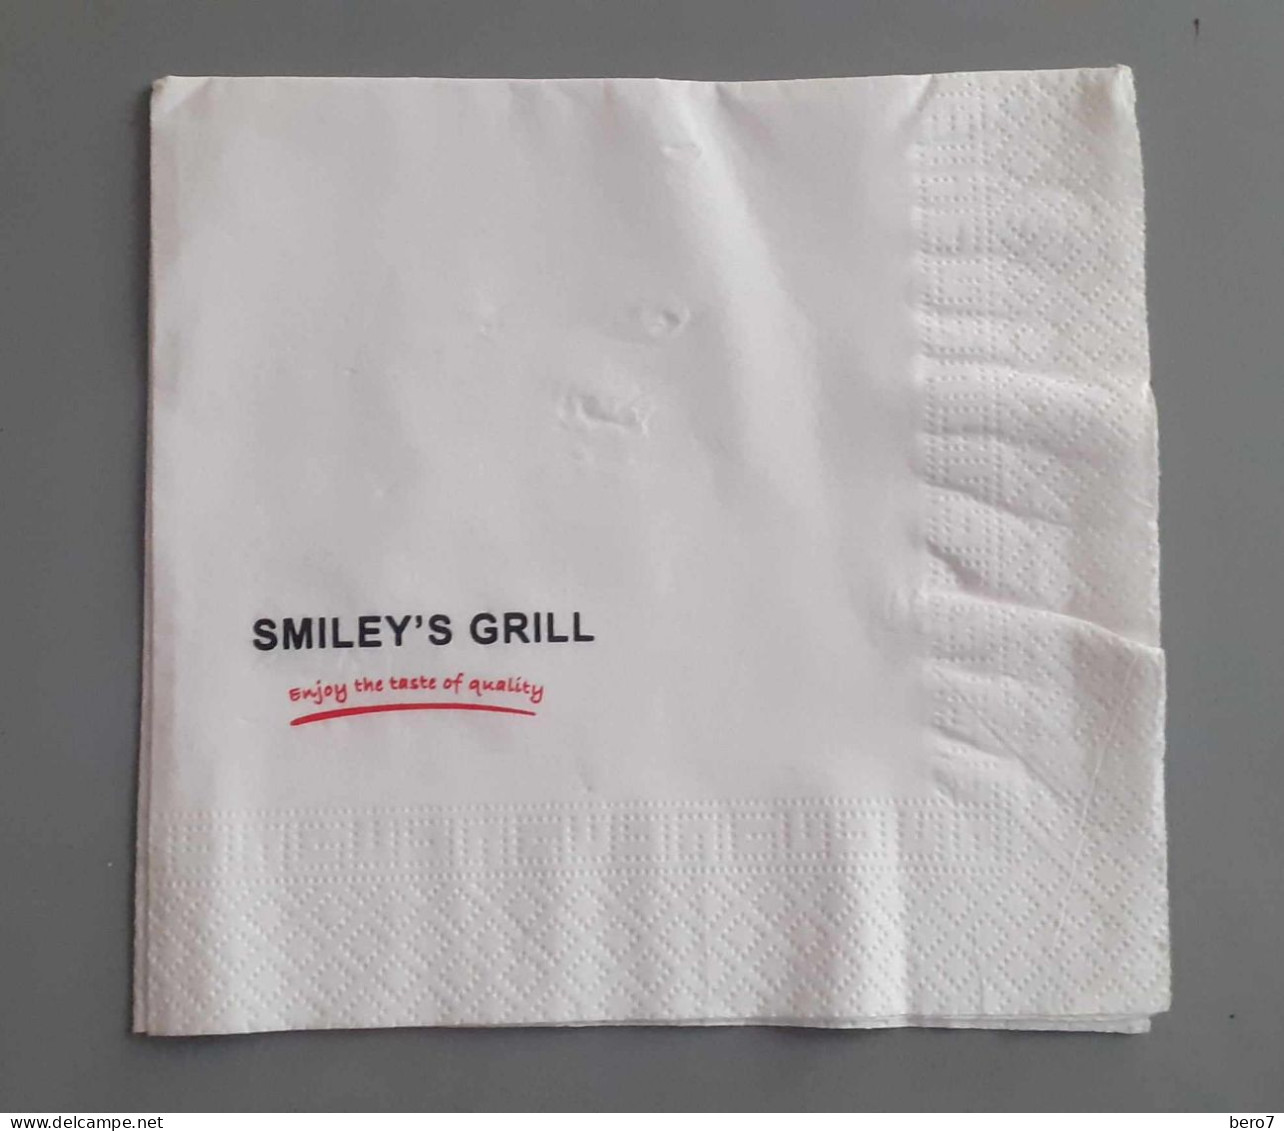 EGYPT - Smile 's Grill Restaurant Napkins (Egypte) (Egitto) (Ägypten) (Egipto) (Egypten) Africa - Werbeservietten